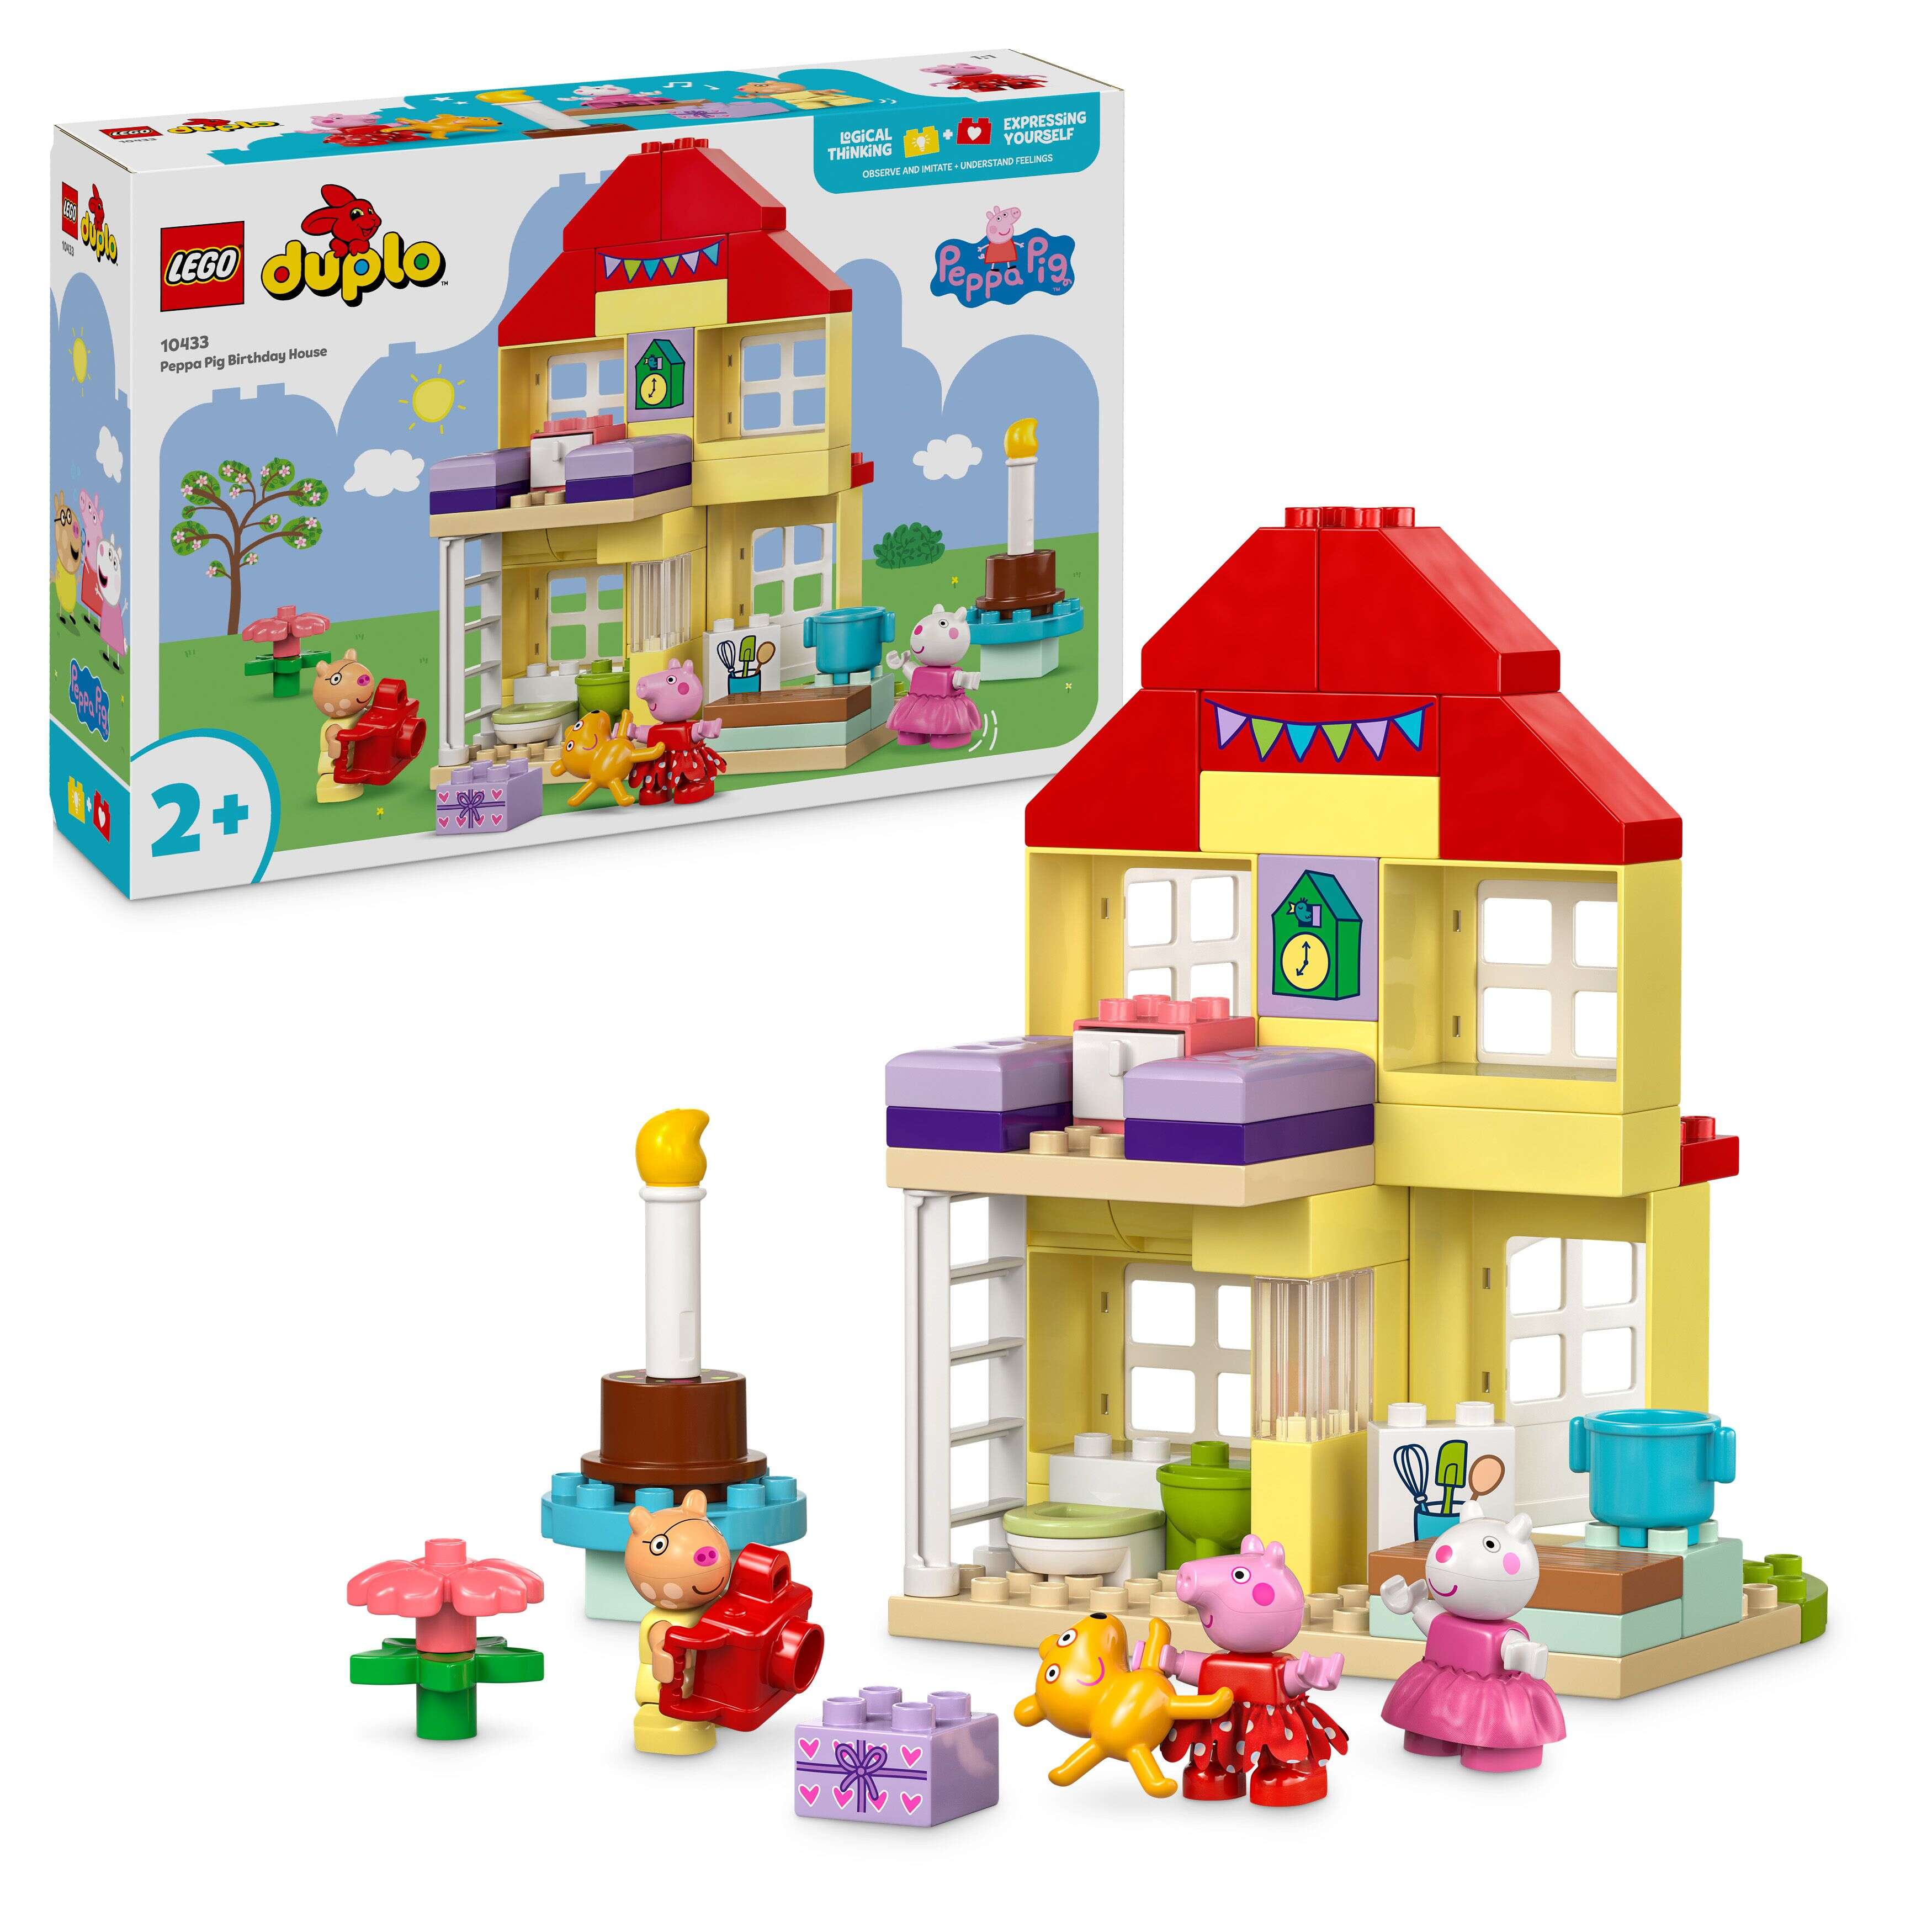 LEGO 10433 DUPLO Peppas Geburtstagshaus